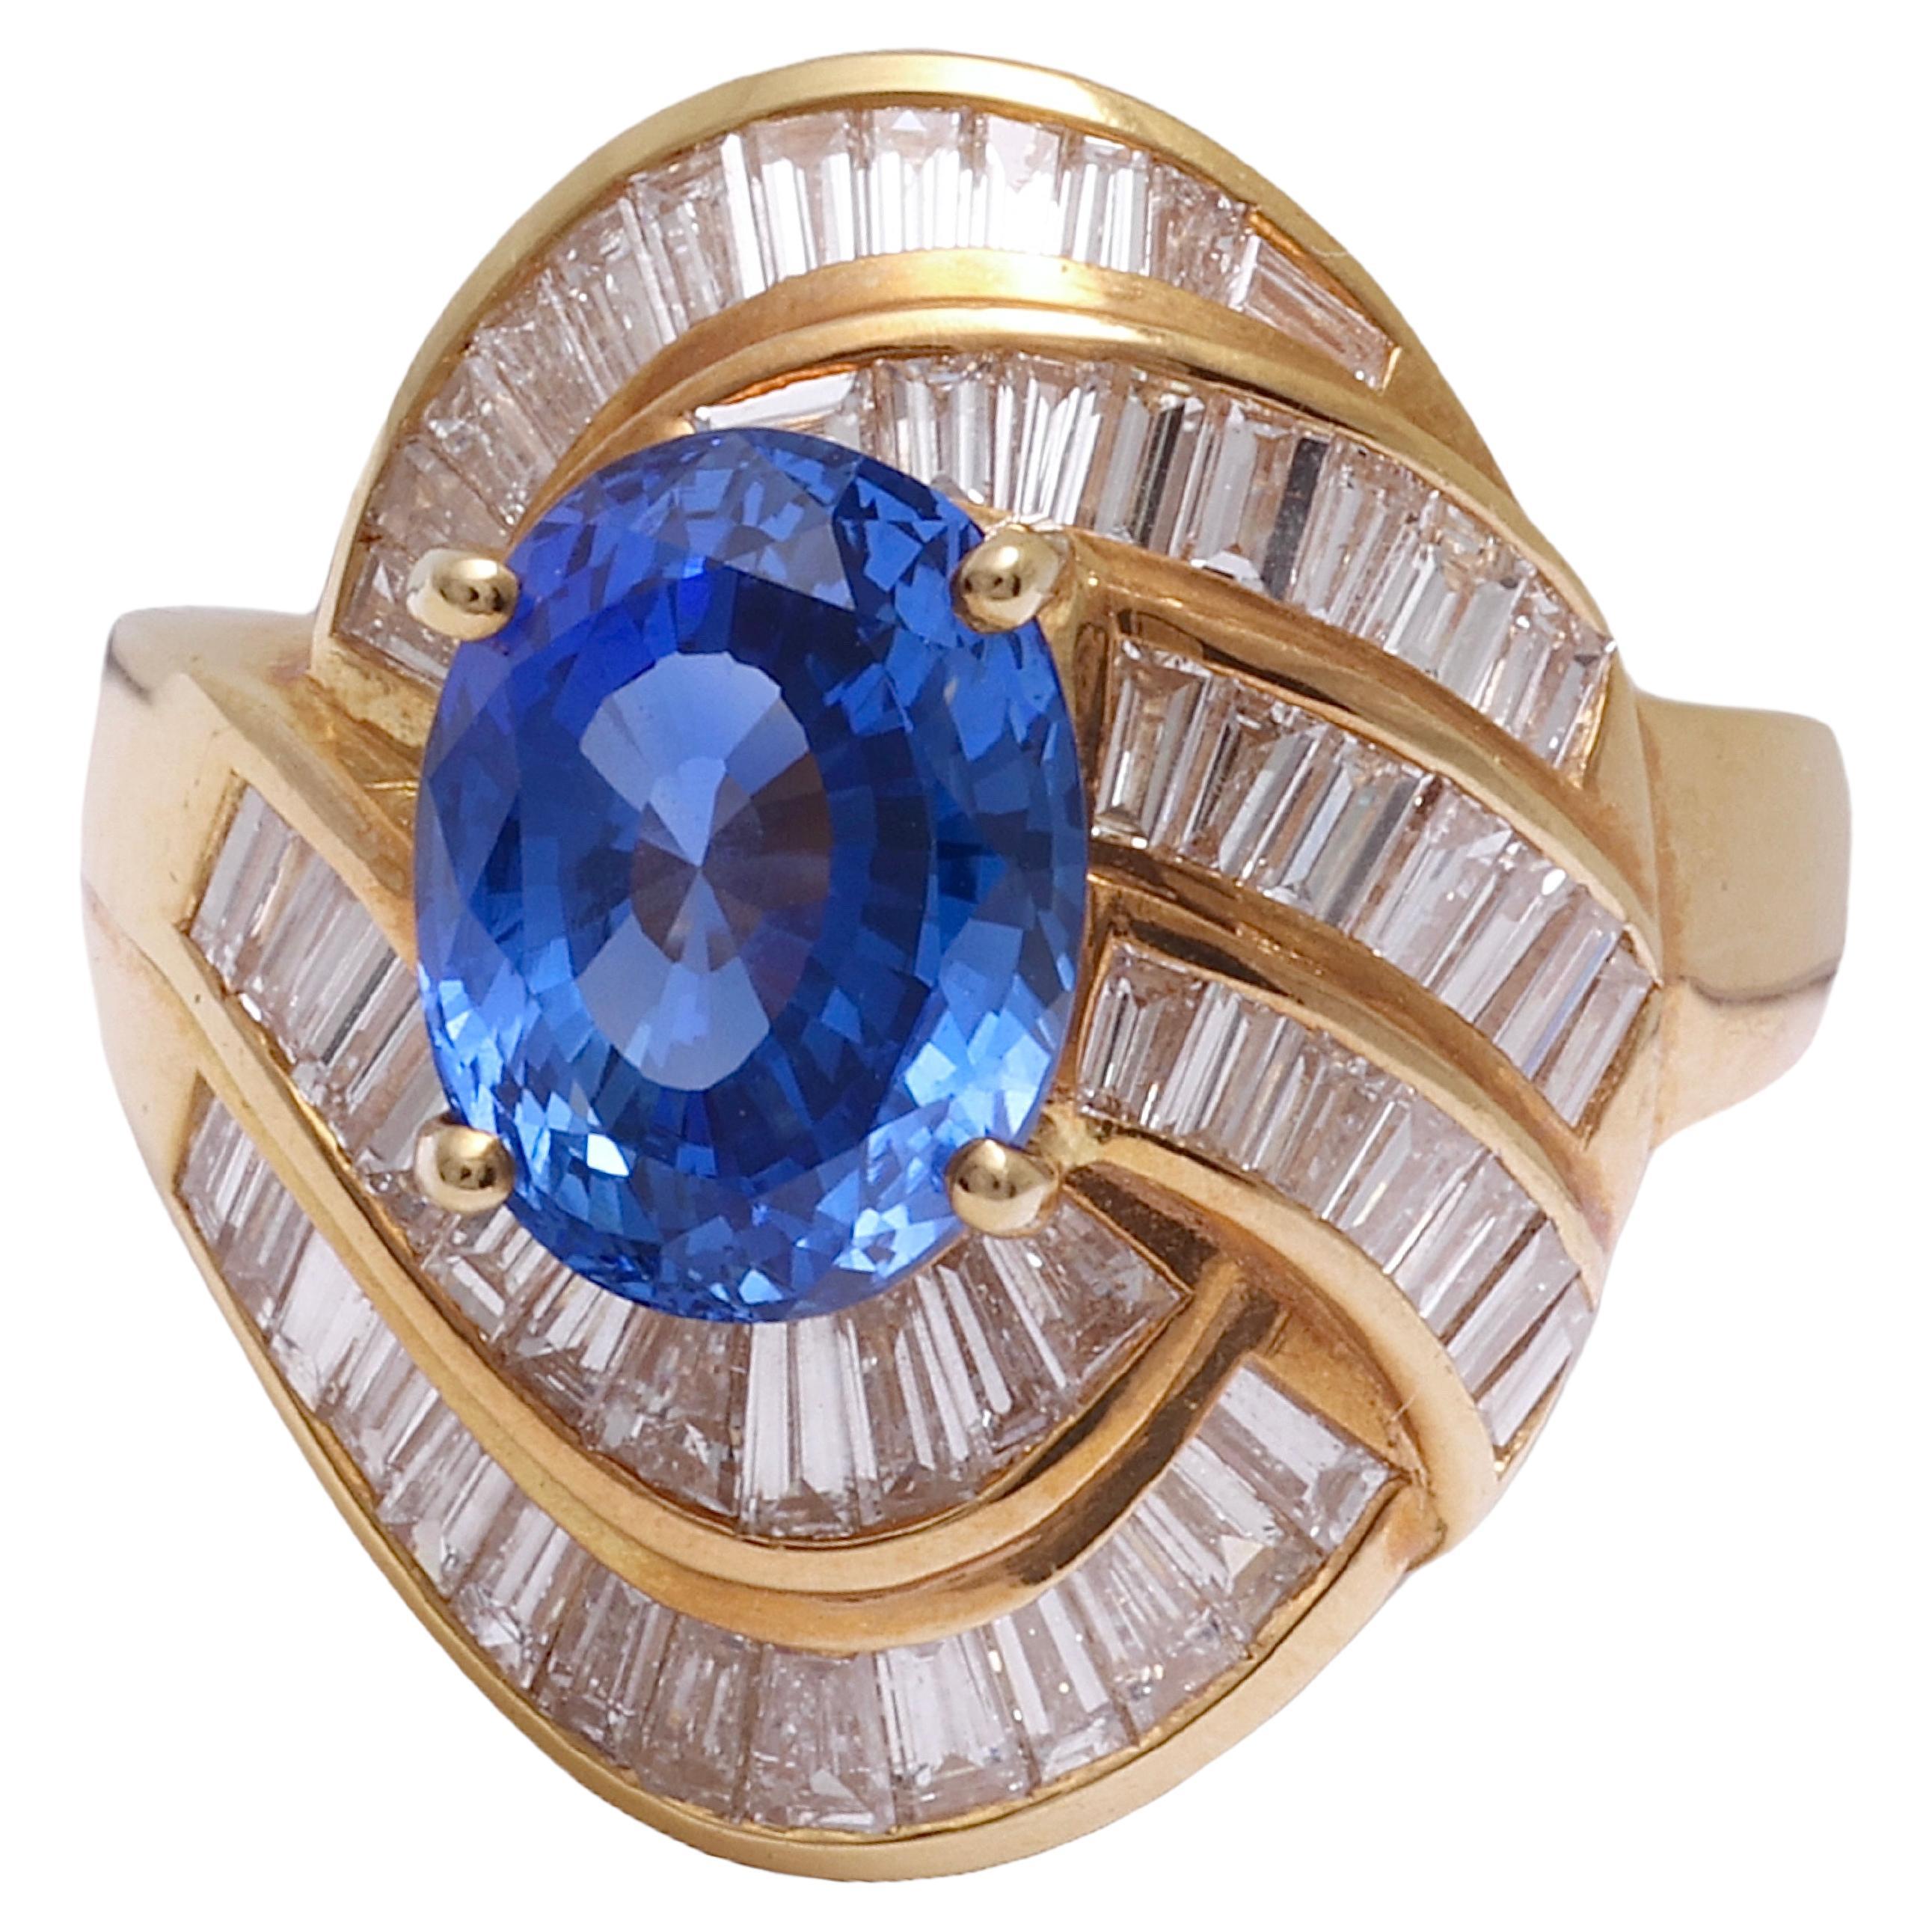  18 kt. Gold Ring With Ceylon Sapphire & Baguette Cut Diamonds